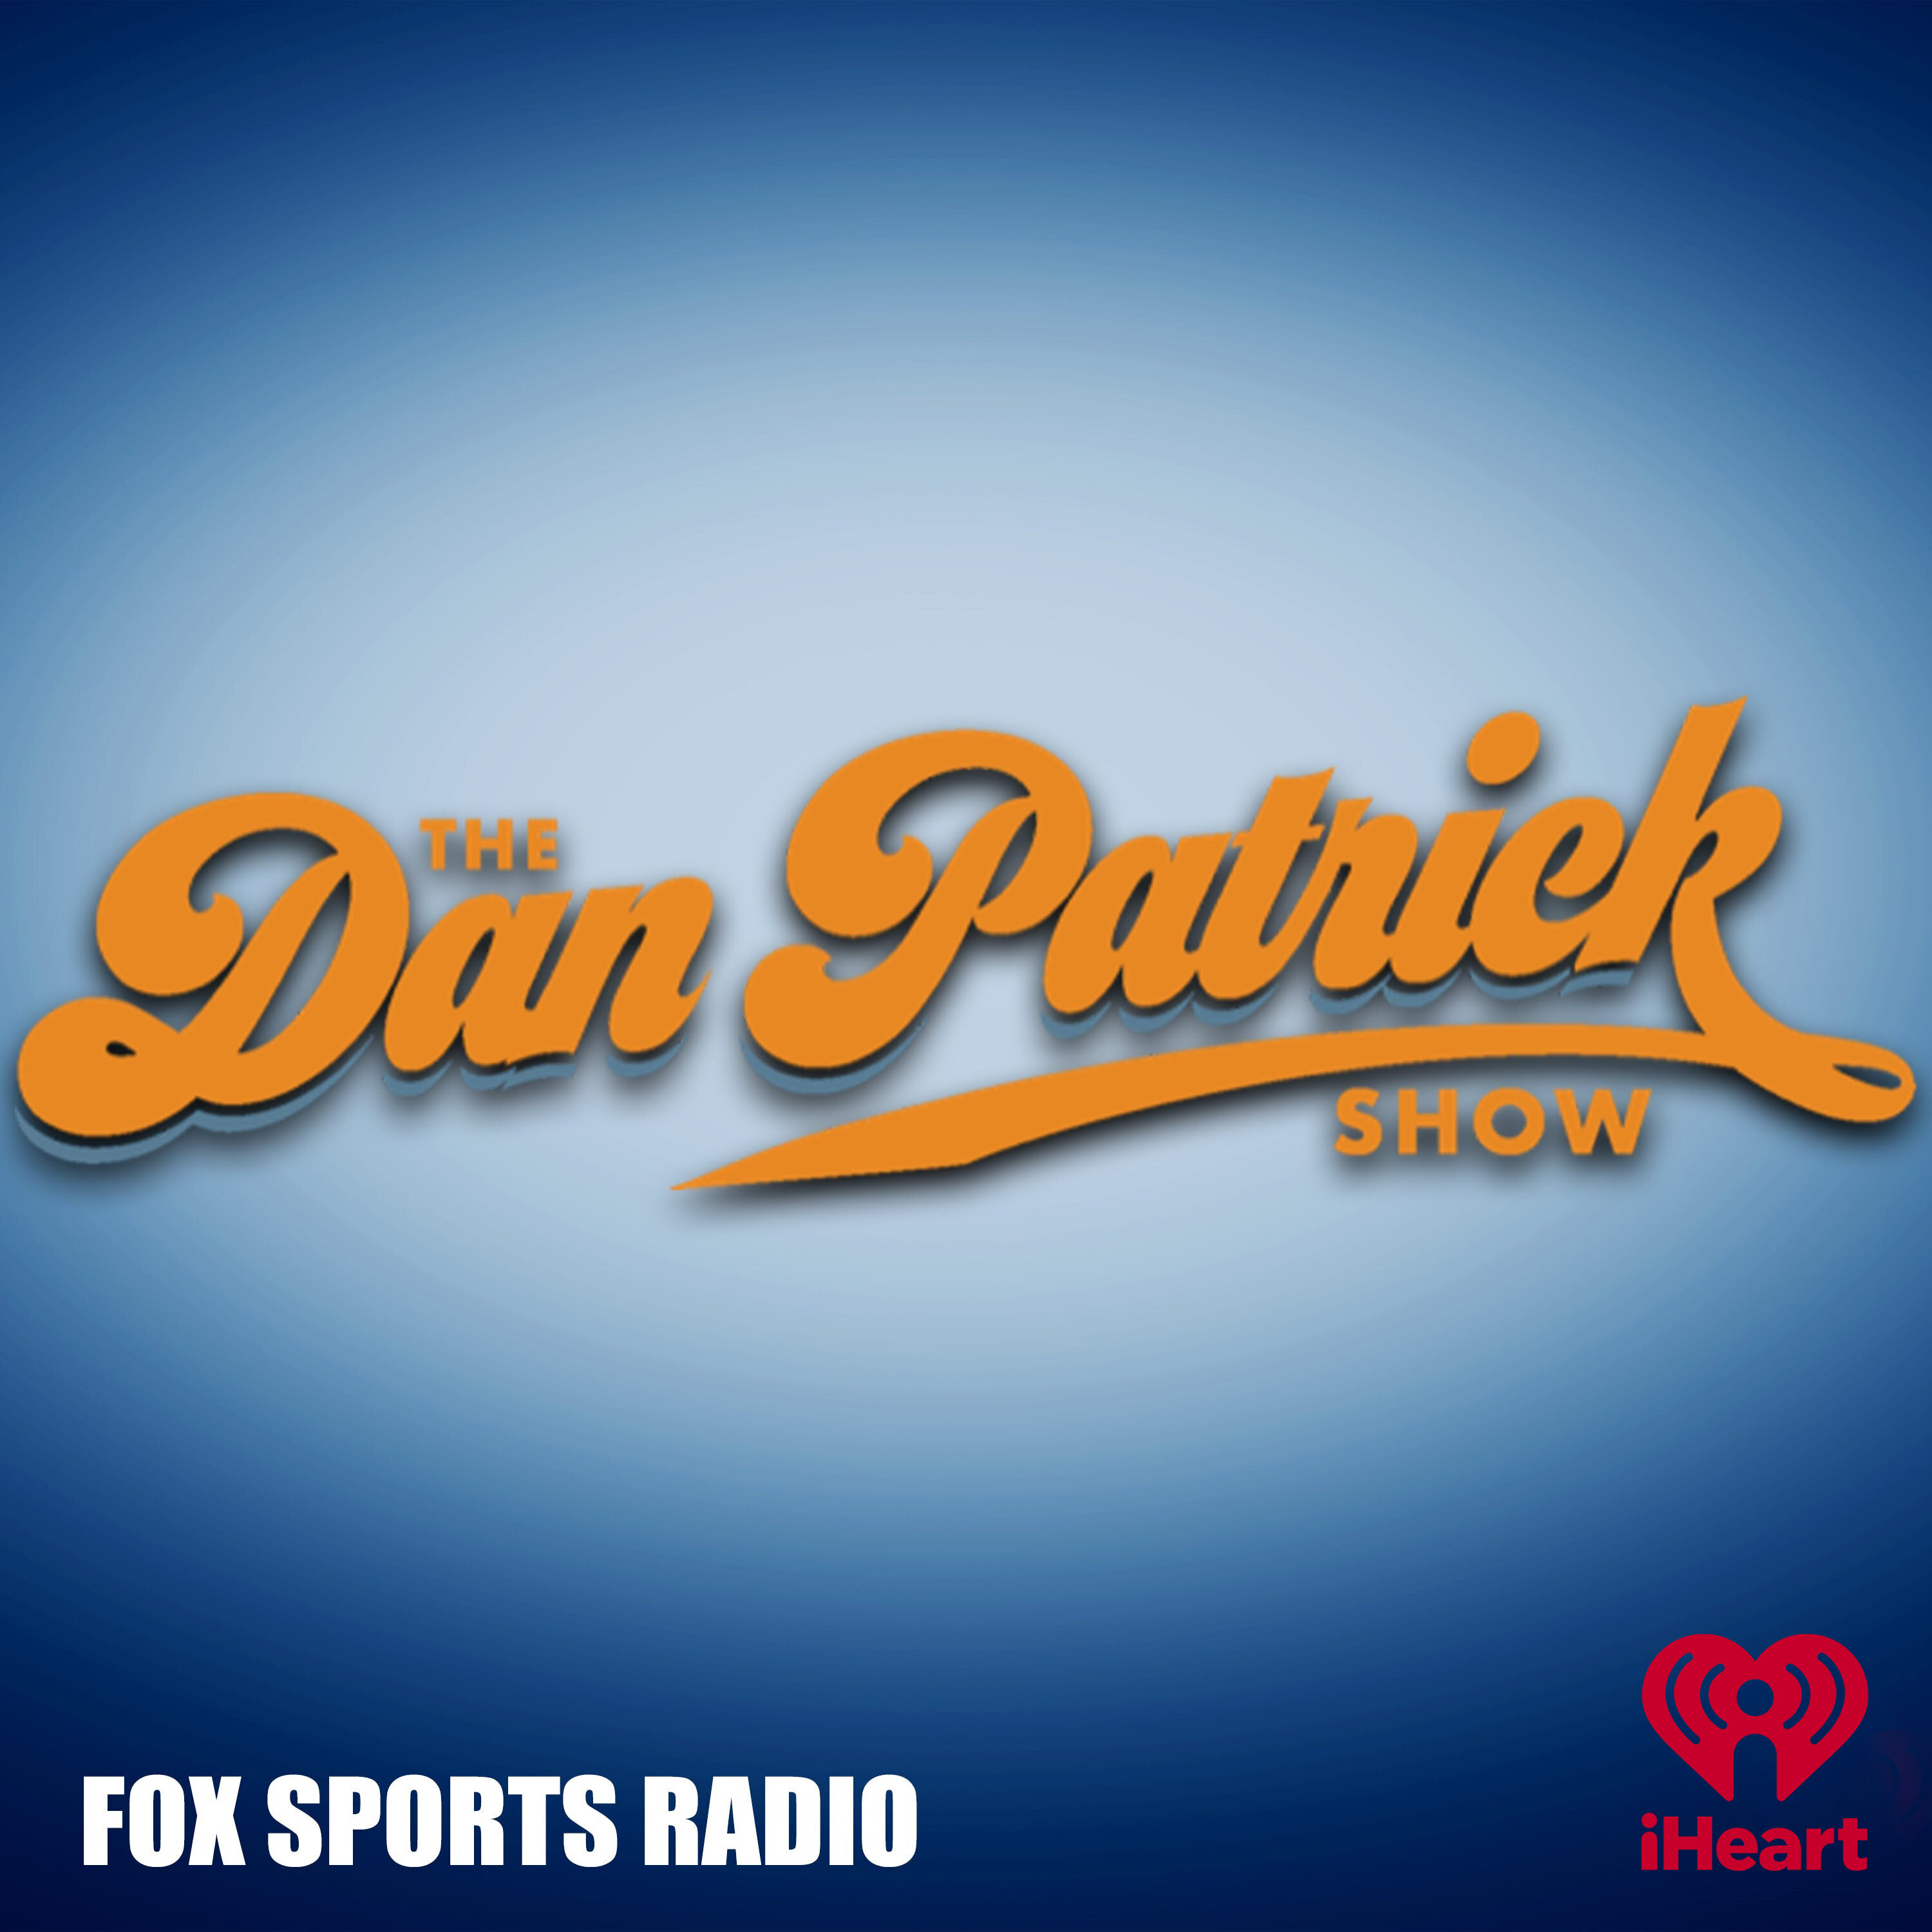 The Dan Patrick Show podcast show image